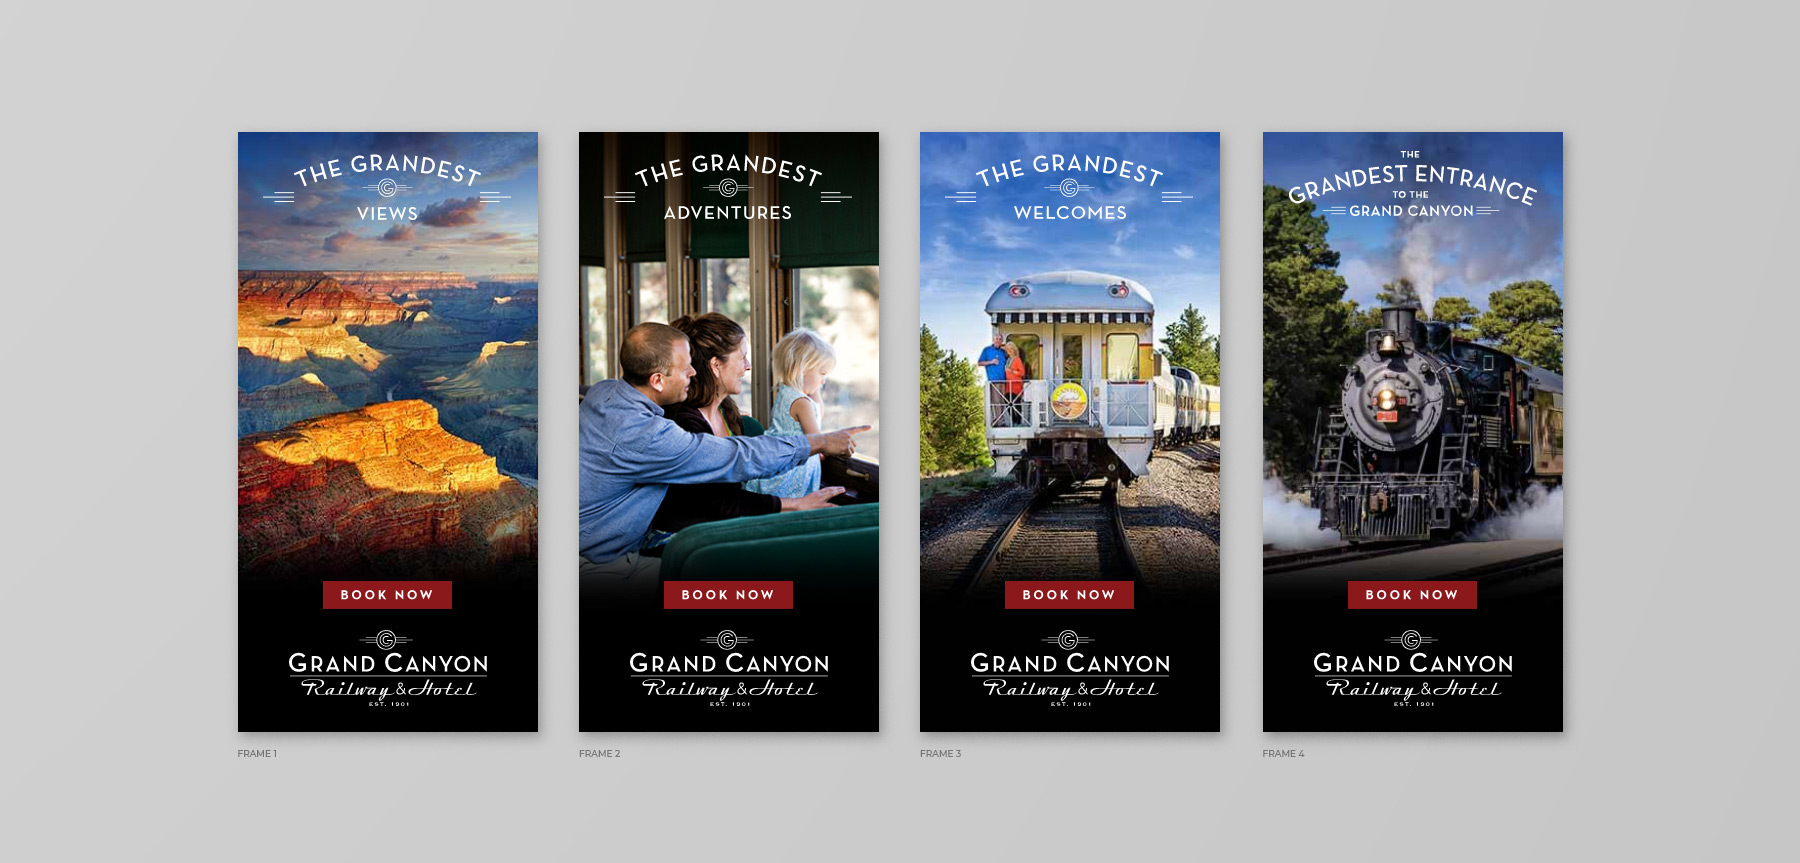 Grand Canyon Railway Banners